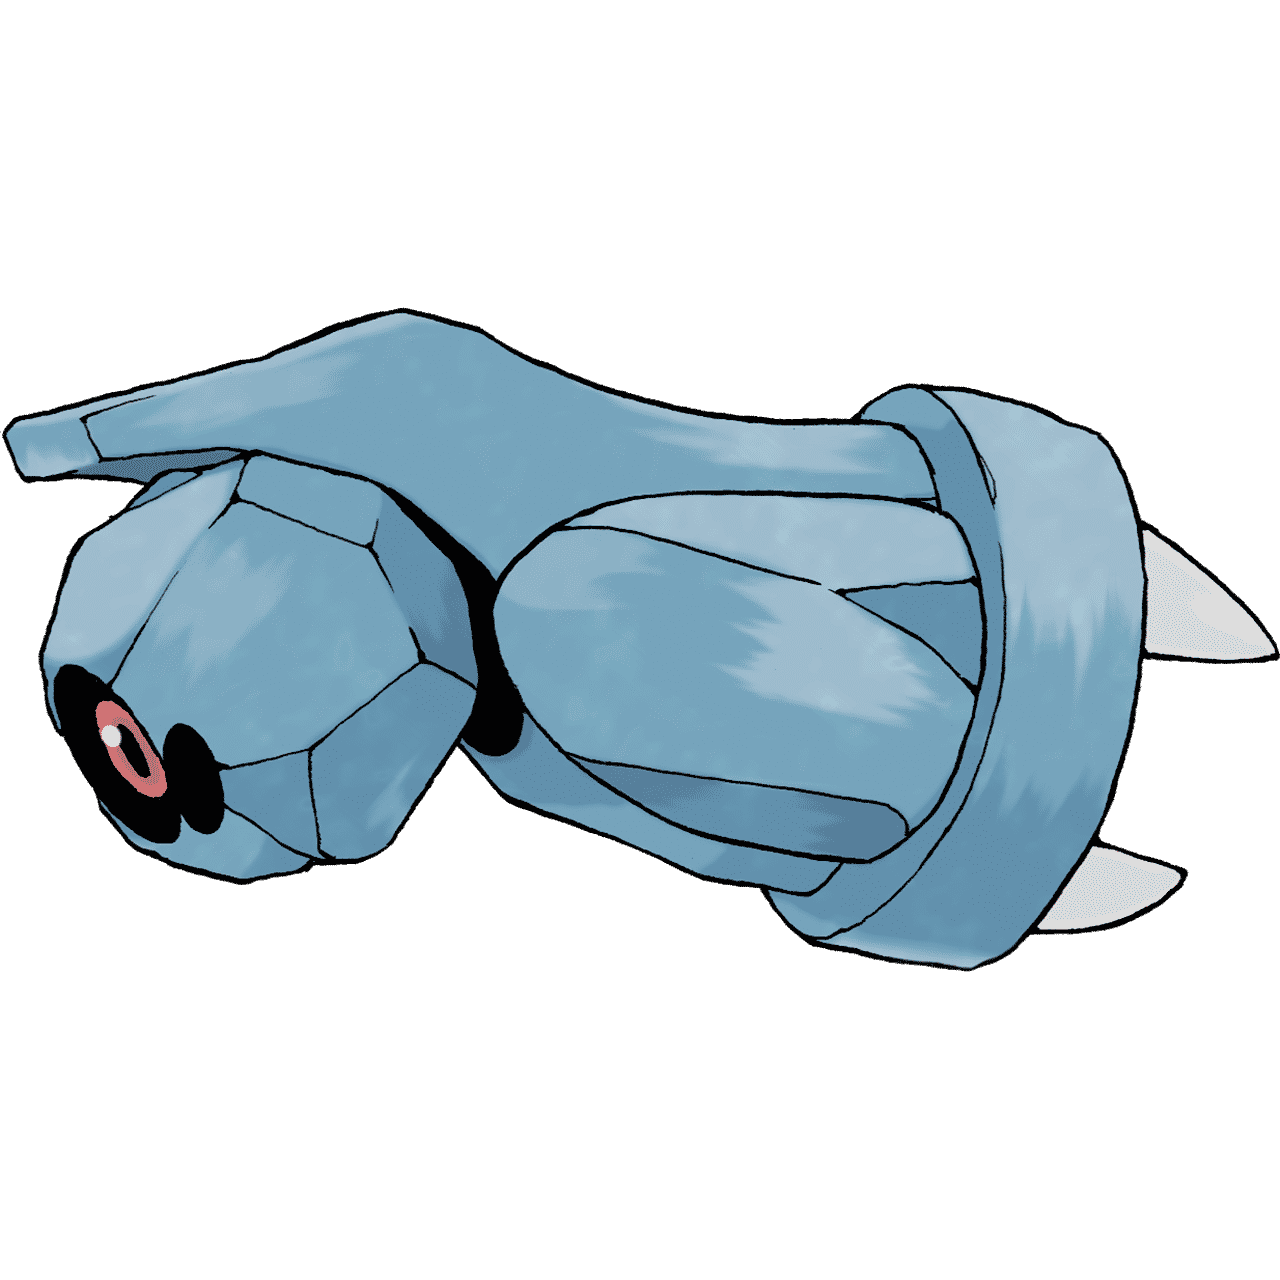 Pokémon Artwork Terhal